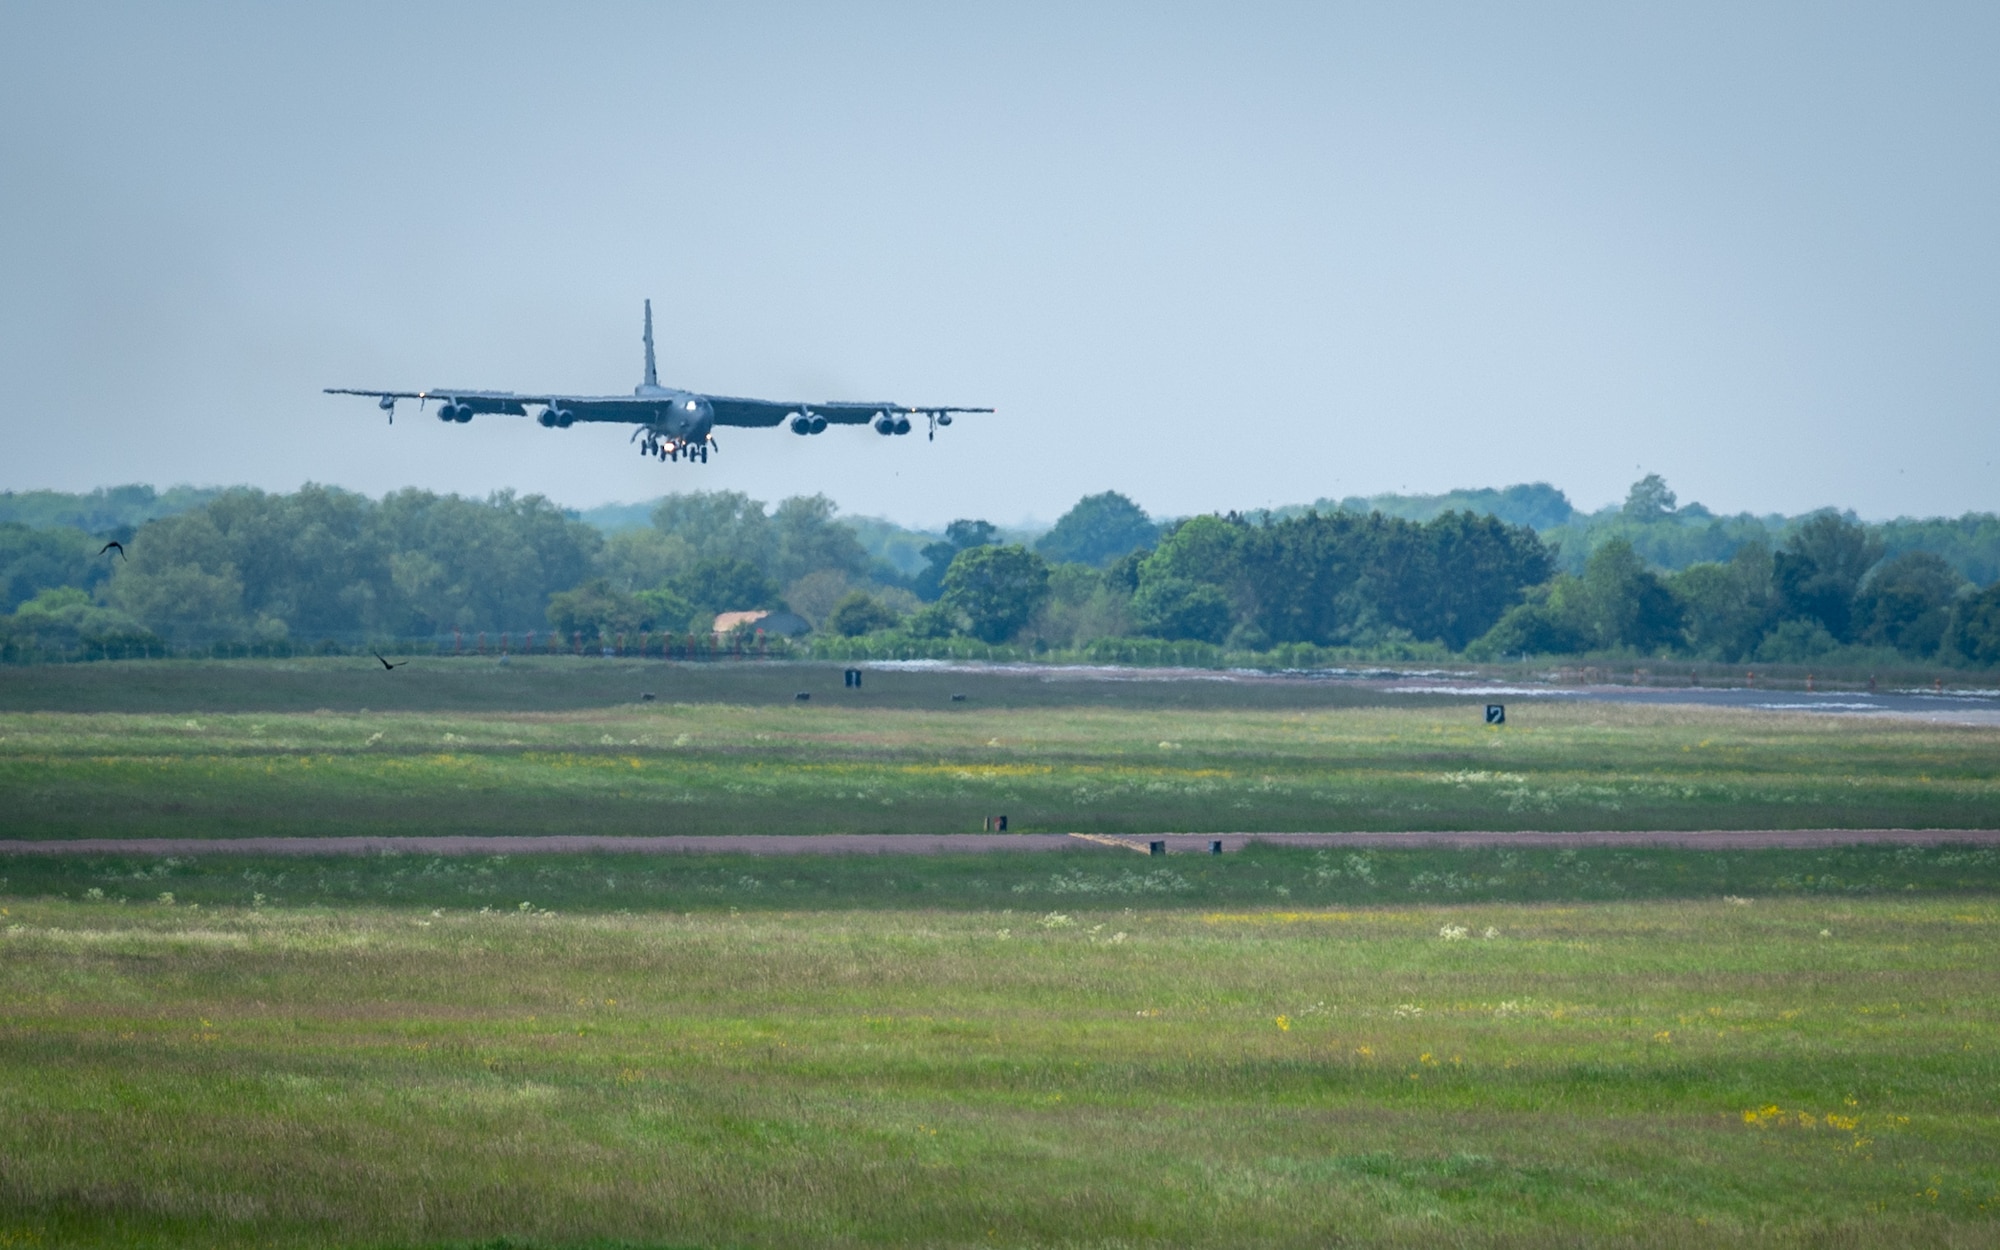 Bomber aircraft lands on runway.